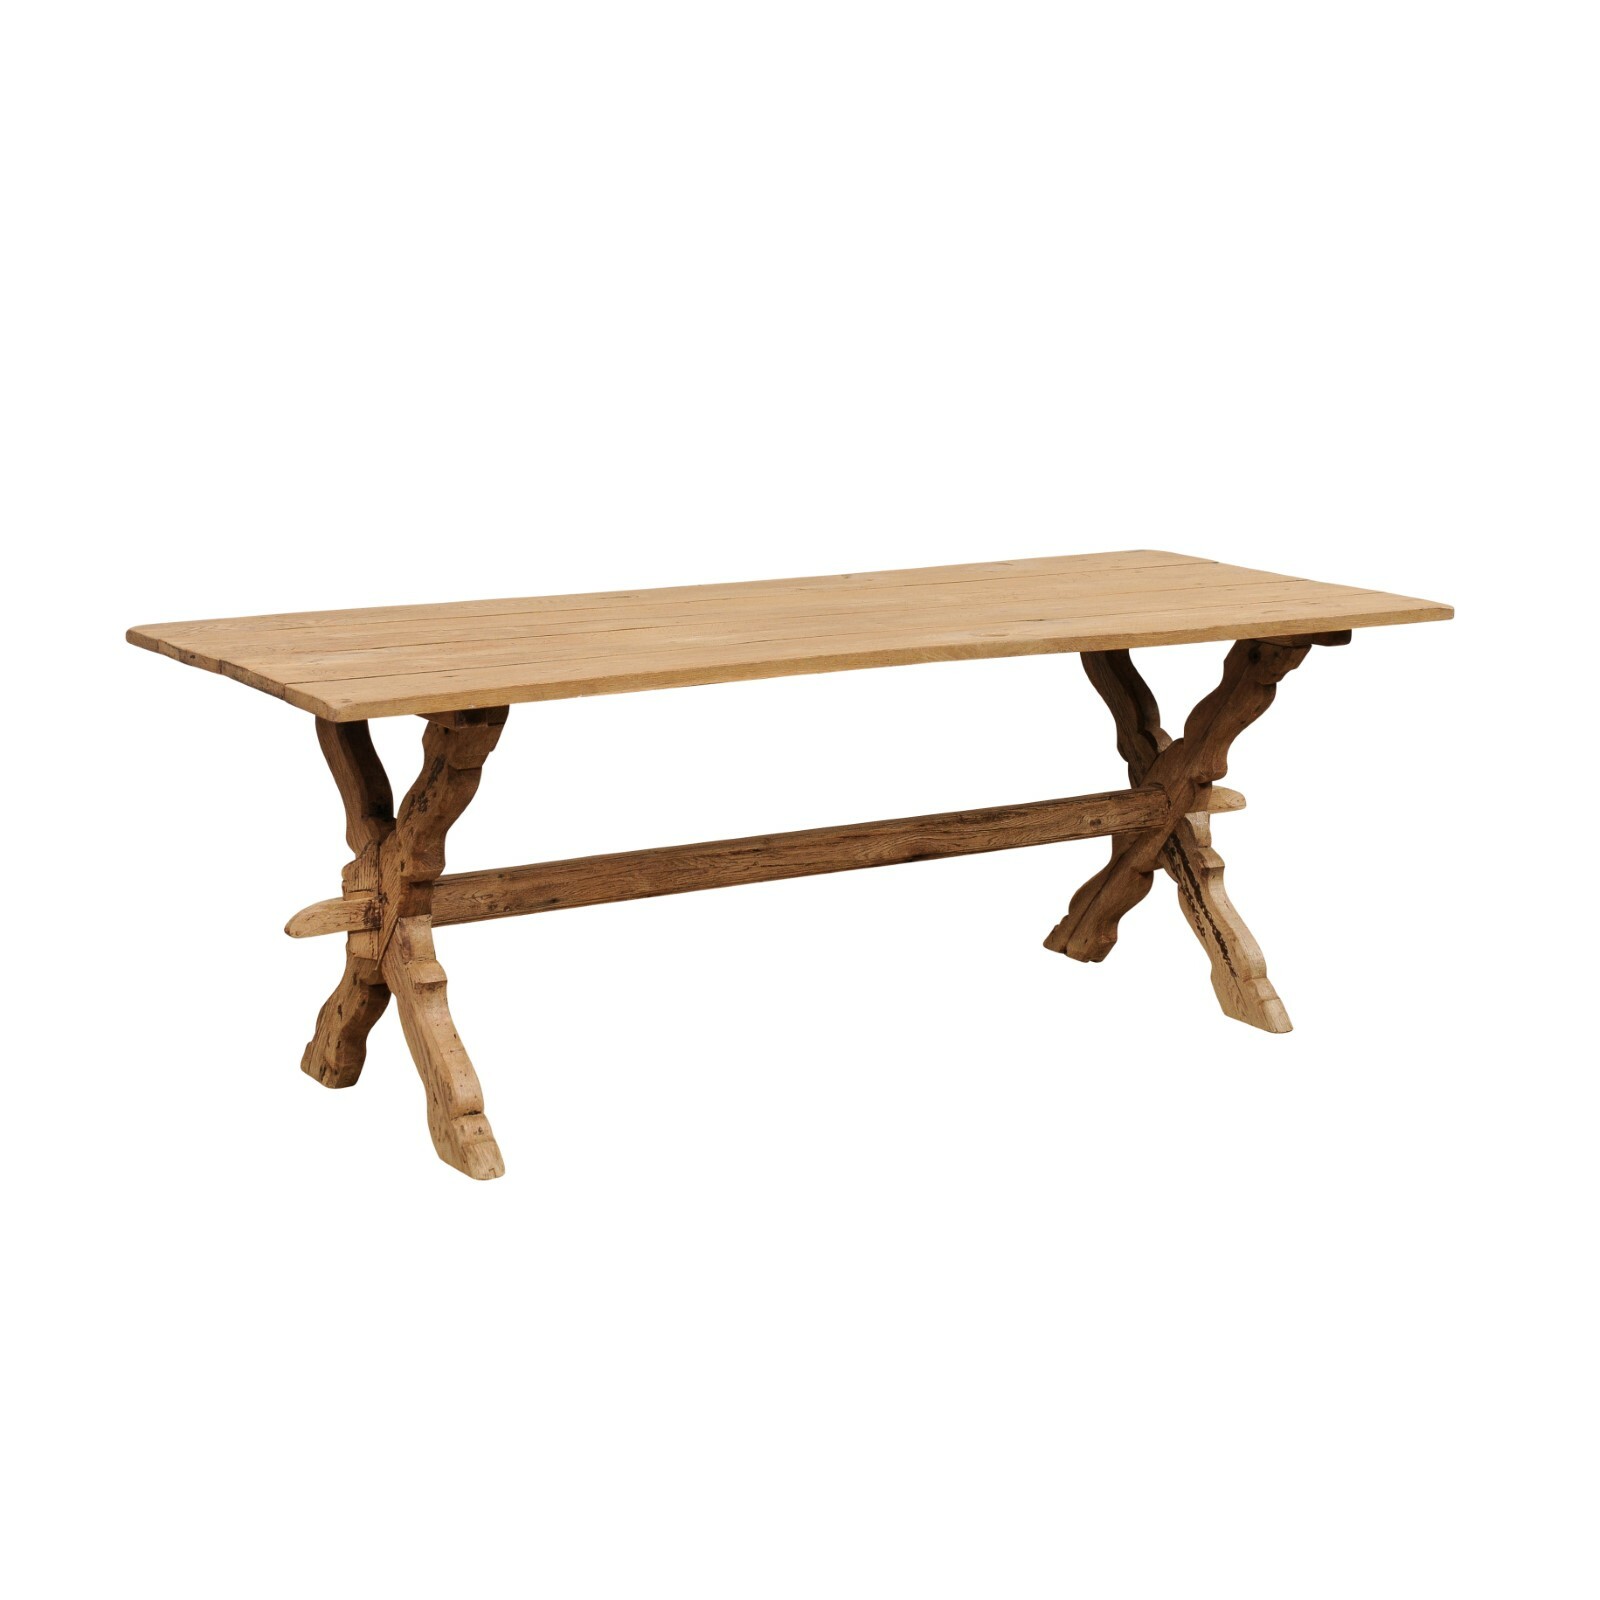 19th C. Bleached Oak Table or Desk, France